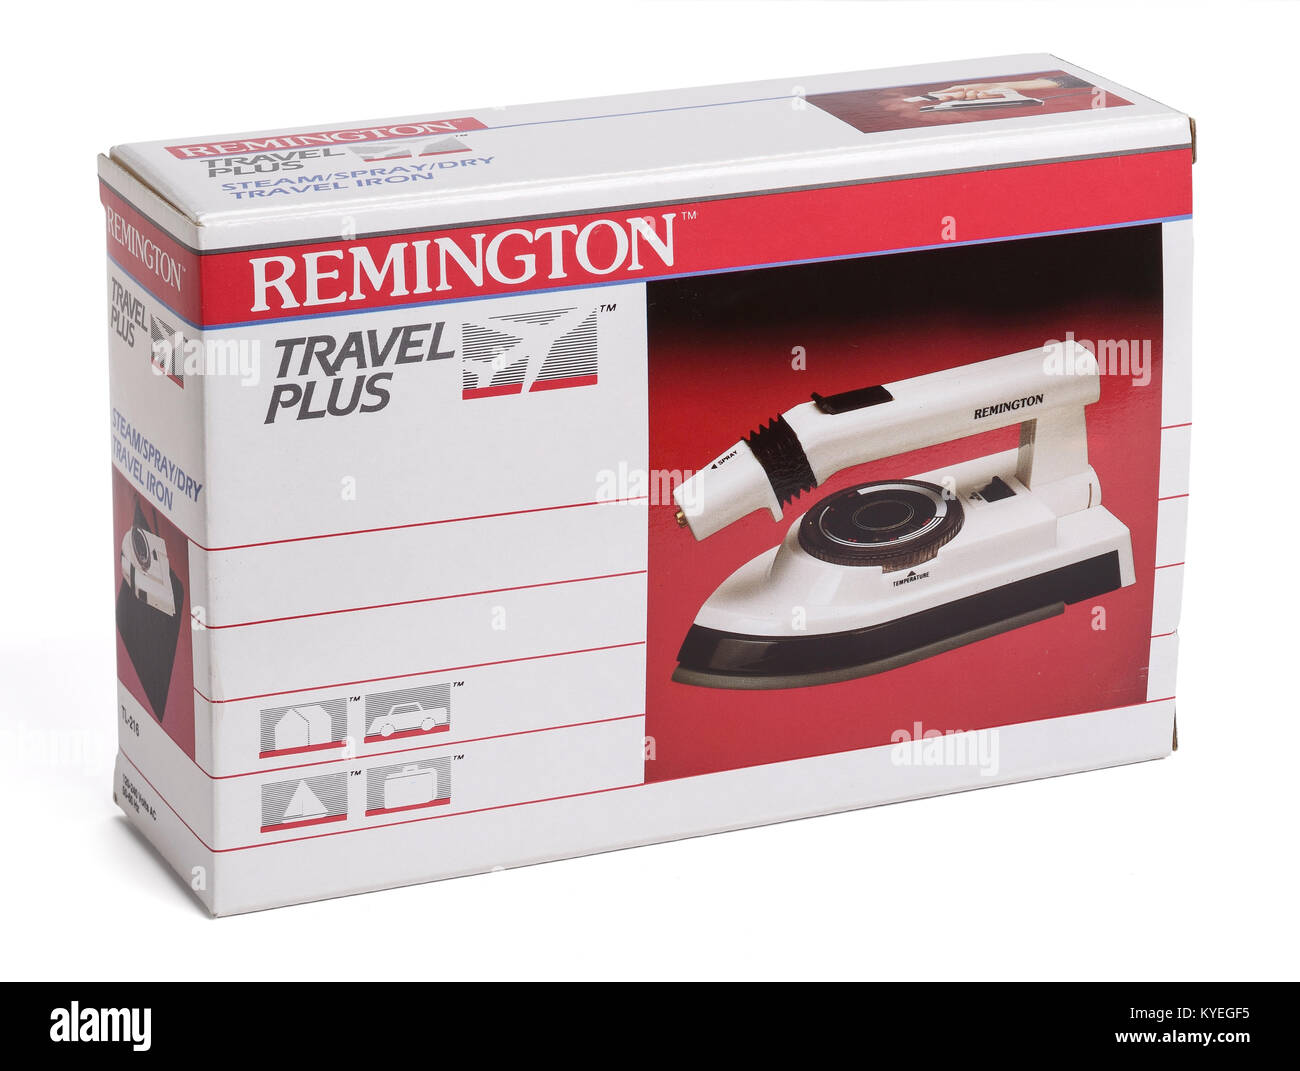 The cardboard box for an old vintage retro Remington travel iron Stock Photo